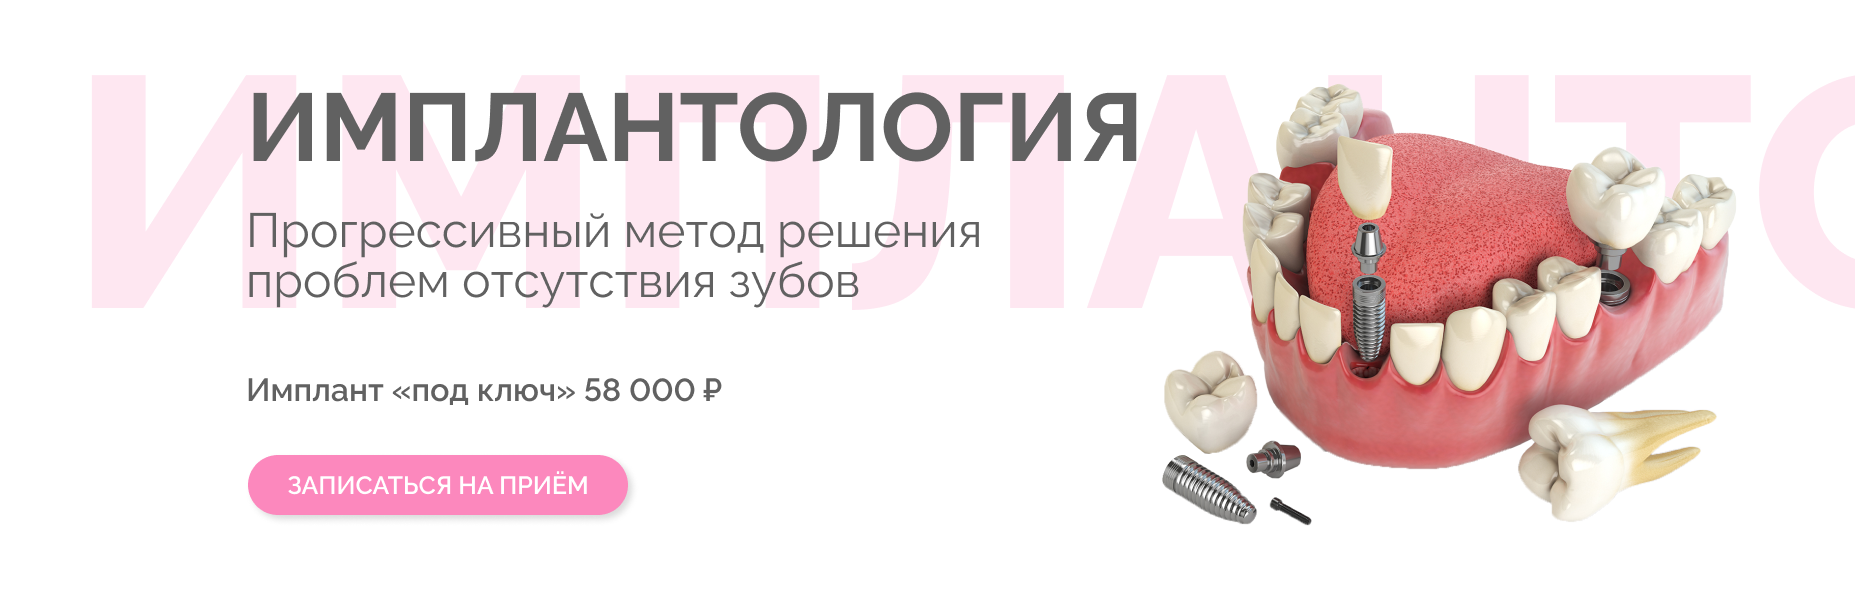 Имплантация зубов «под ключ» Томск Осипова